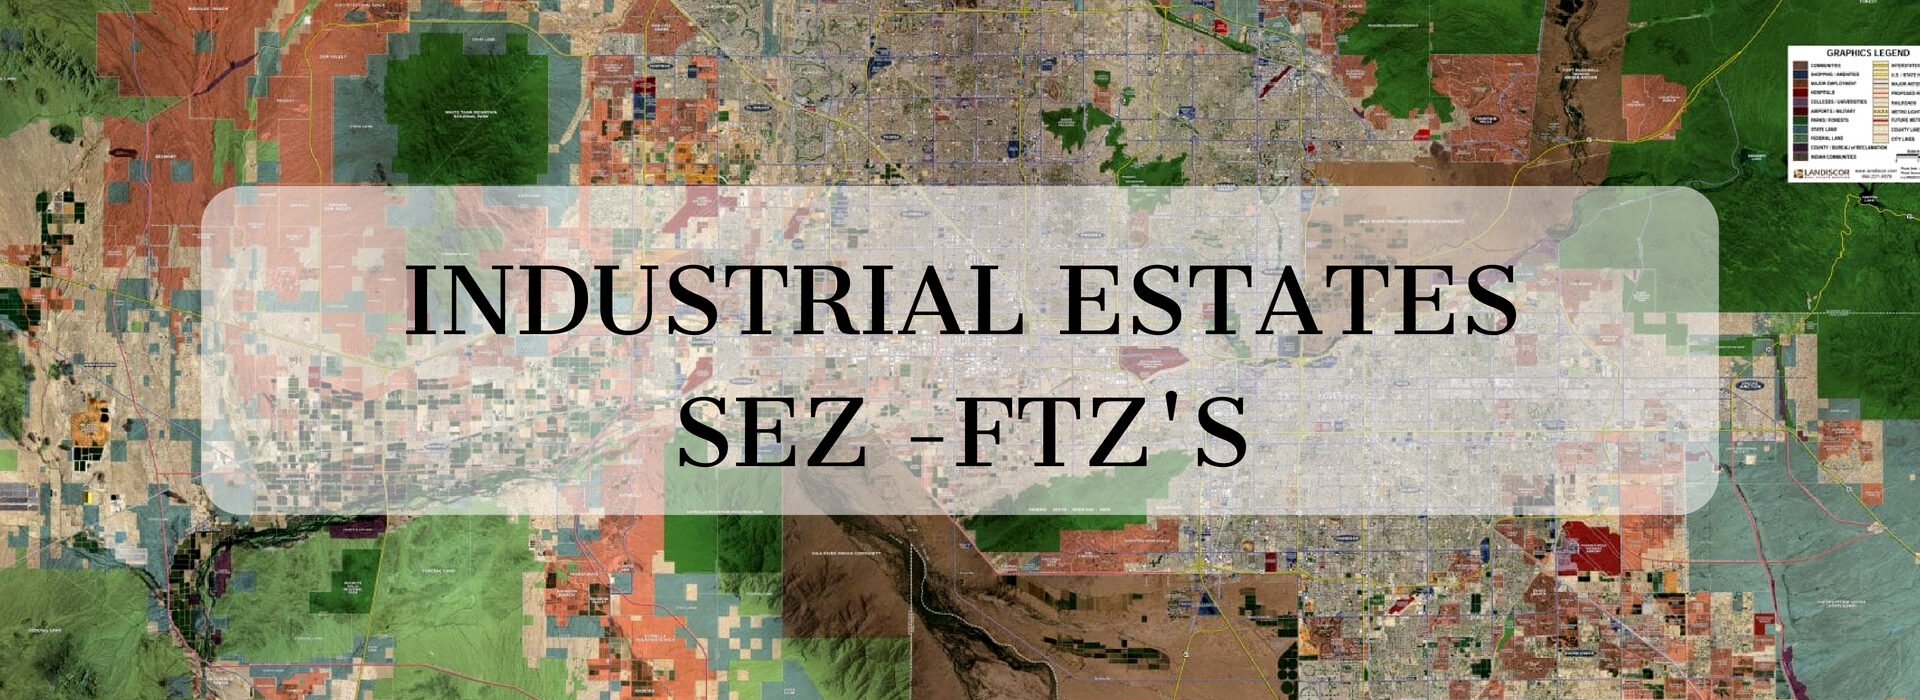 industrial estates sez ftz